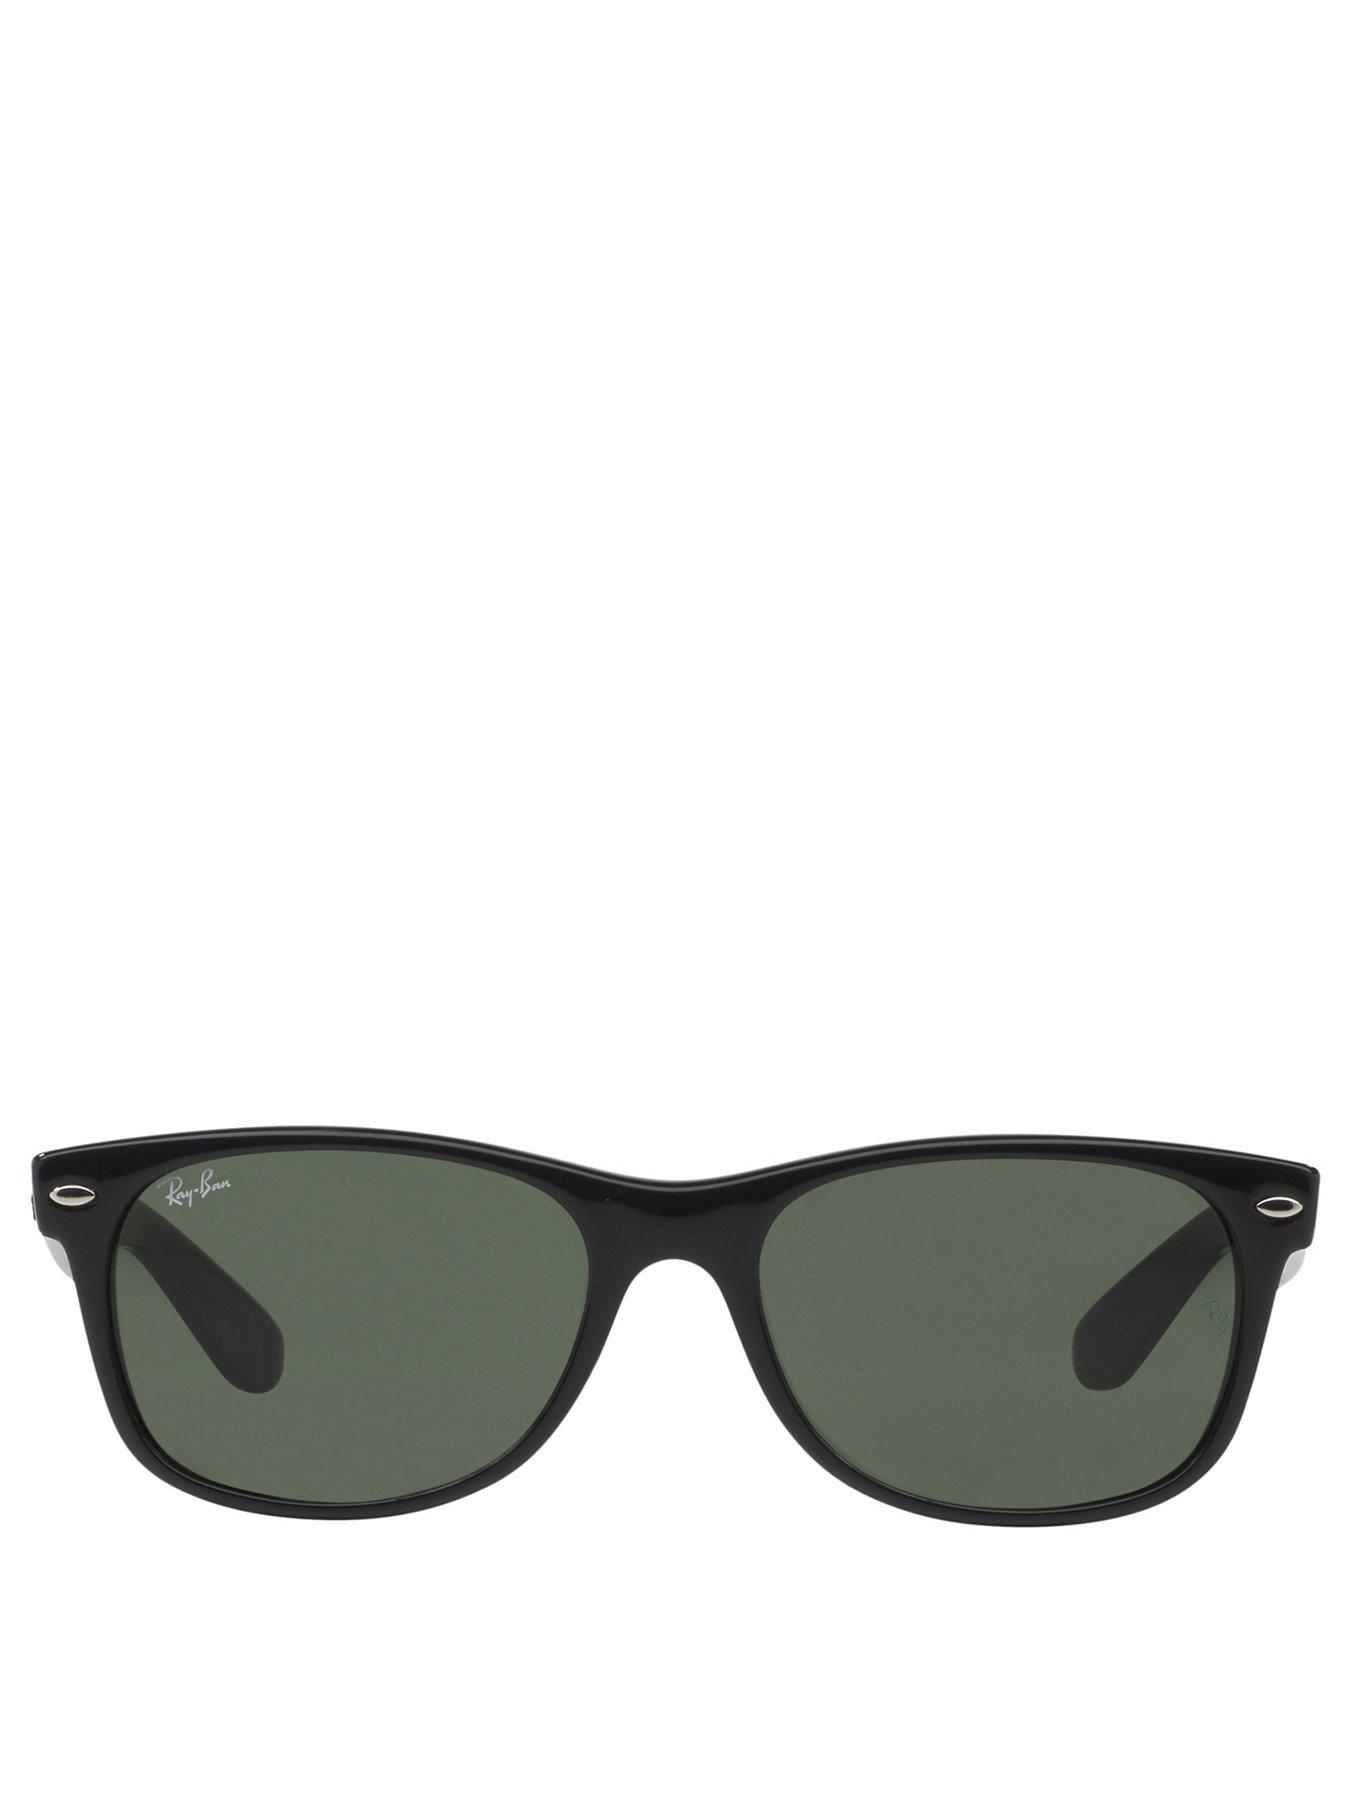 Ray-Ban New Wayfarer Sunglasses - Black | Very.co.uk